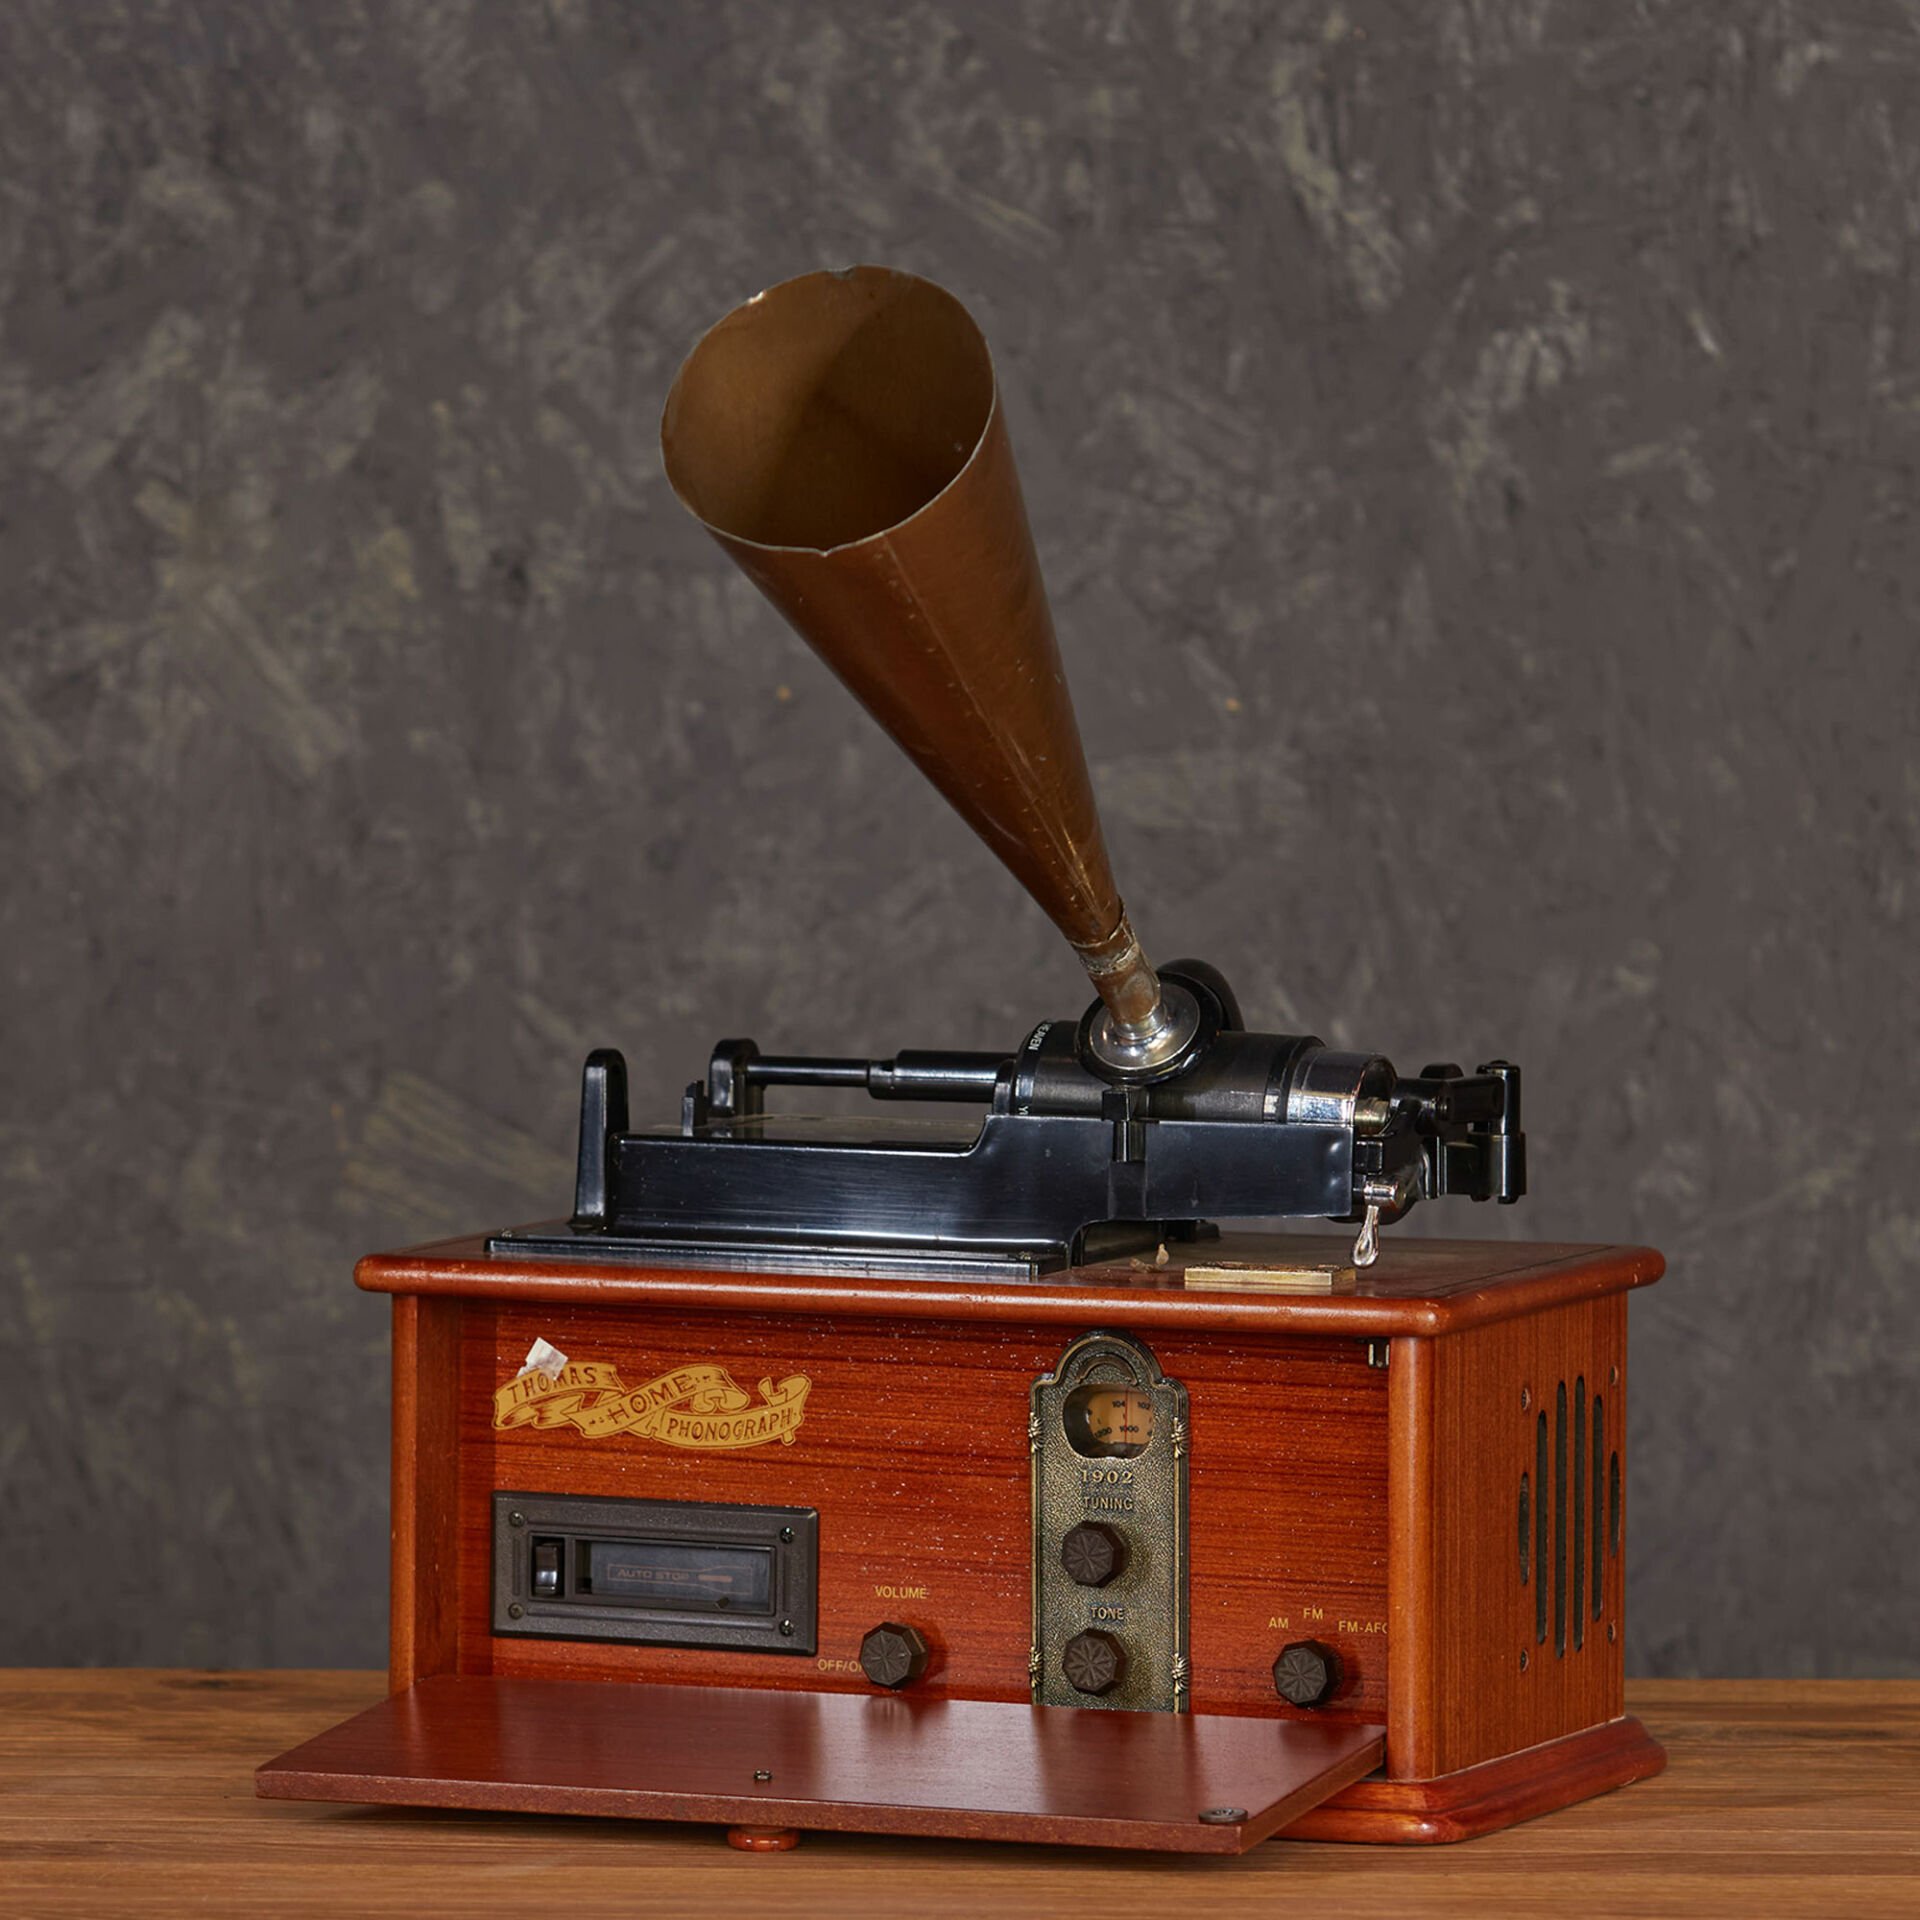 Thomas Home Phonograph